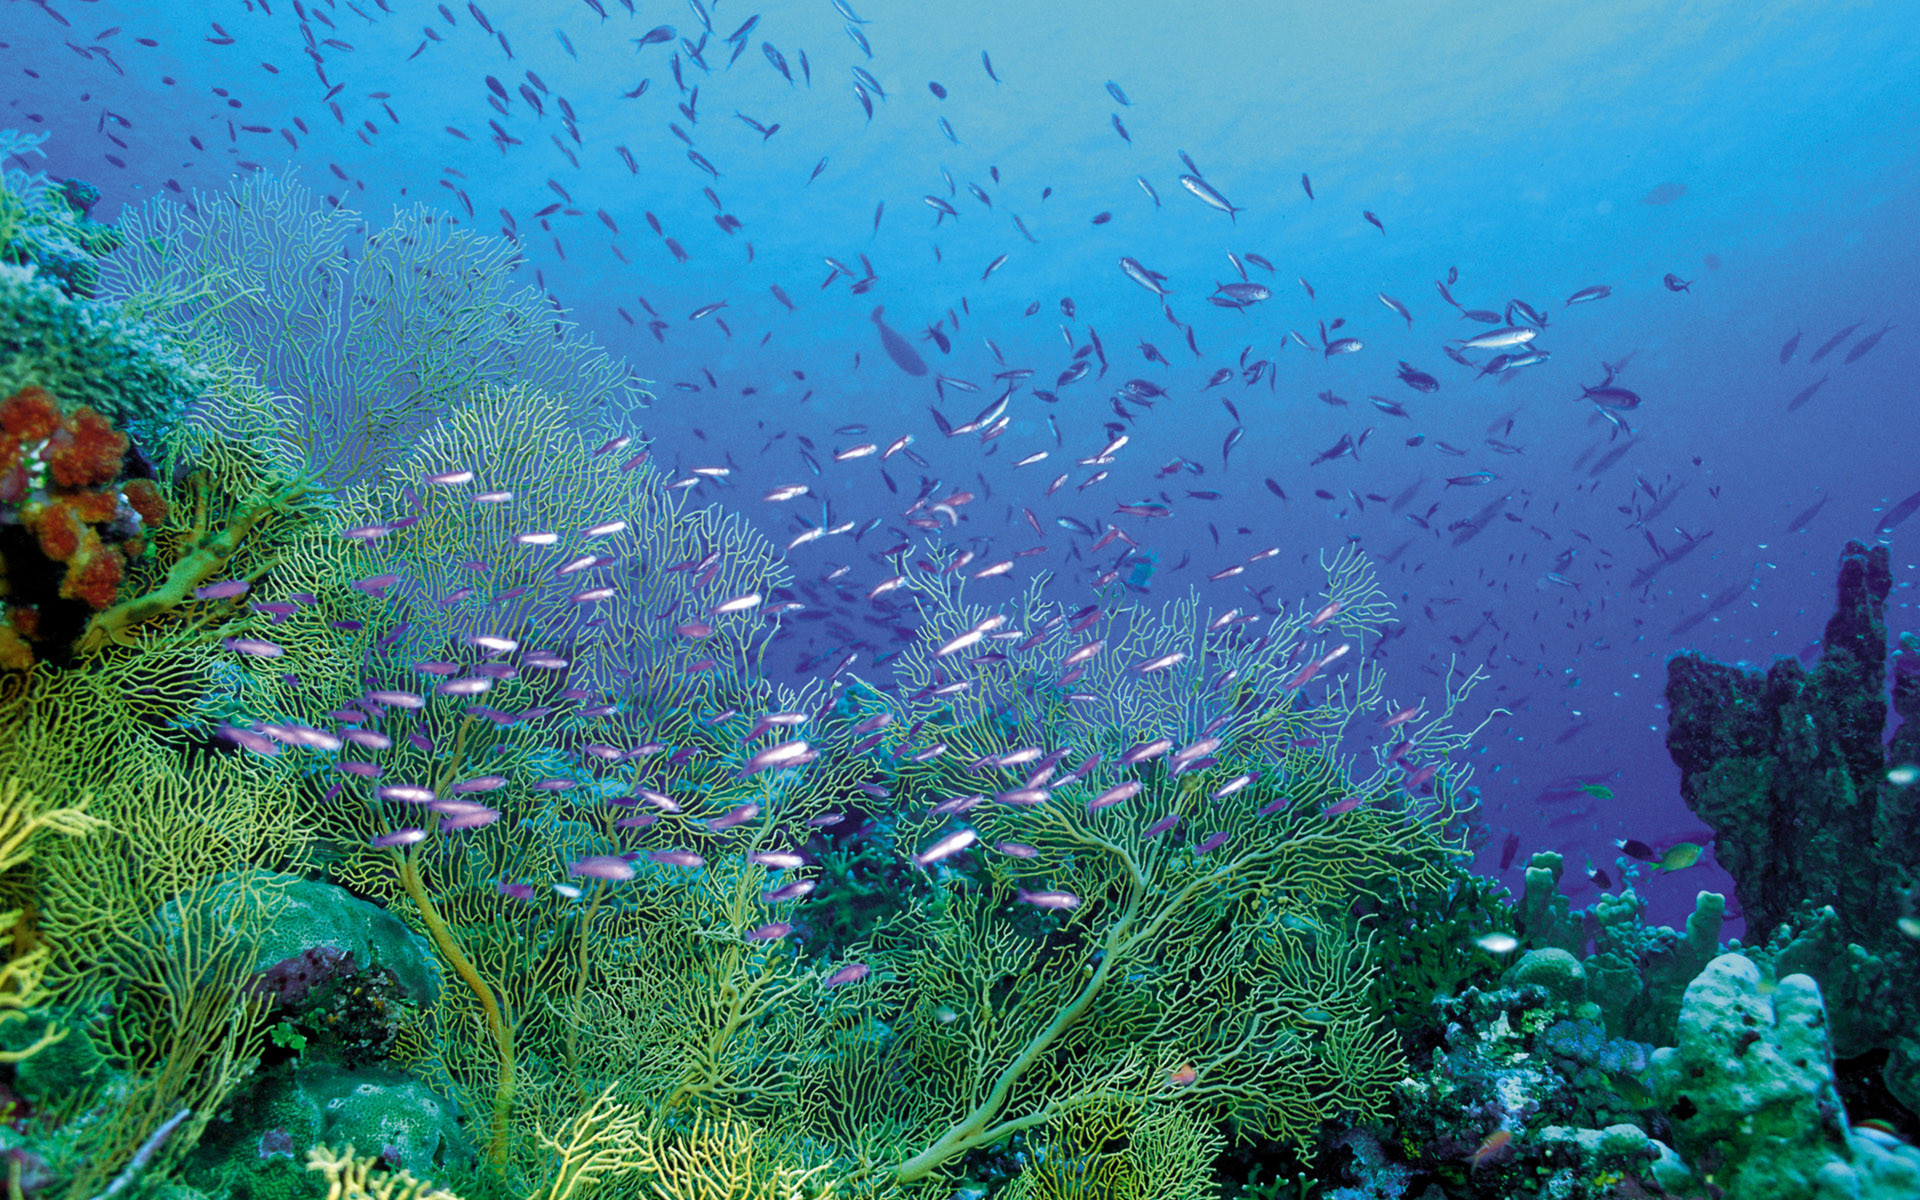 Image: School of fish, corals, reef, algae, ocean